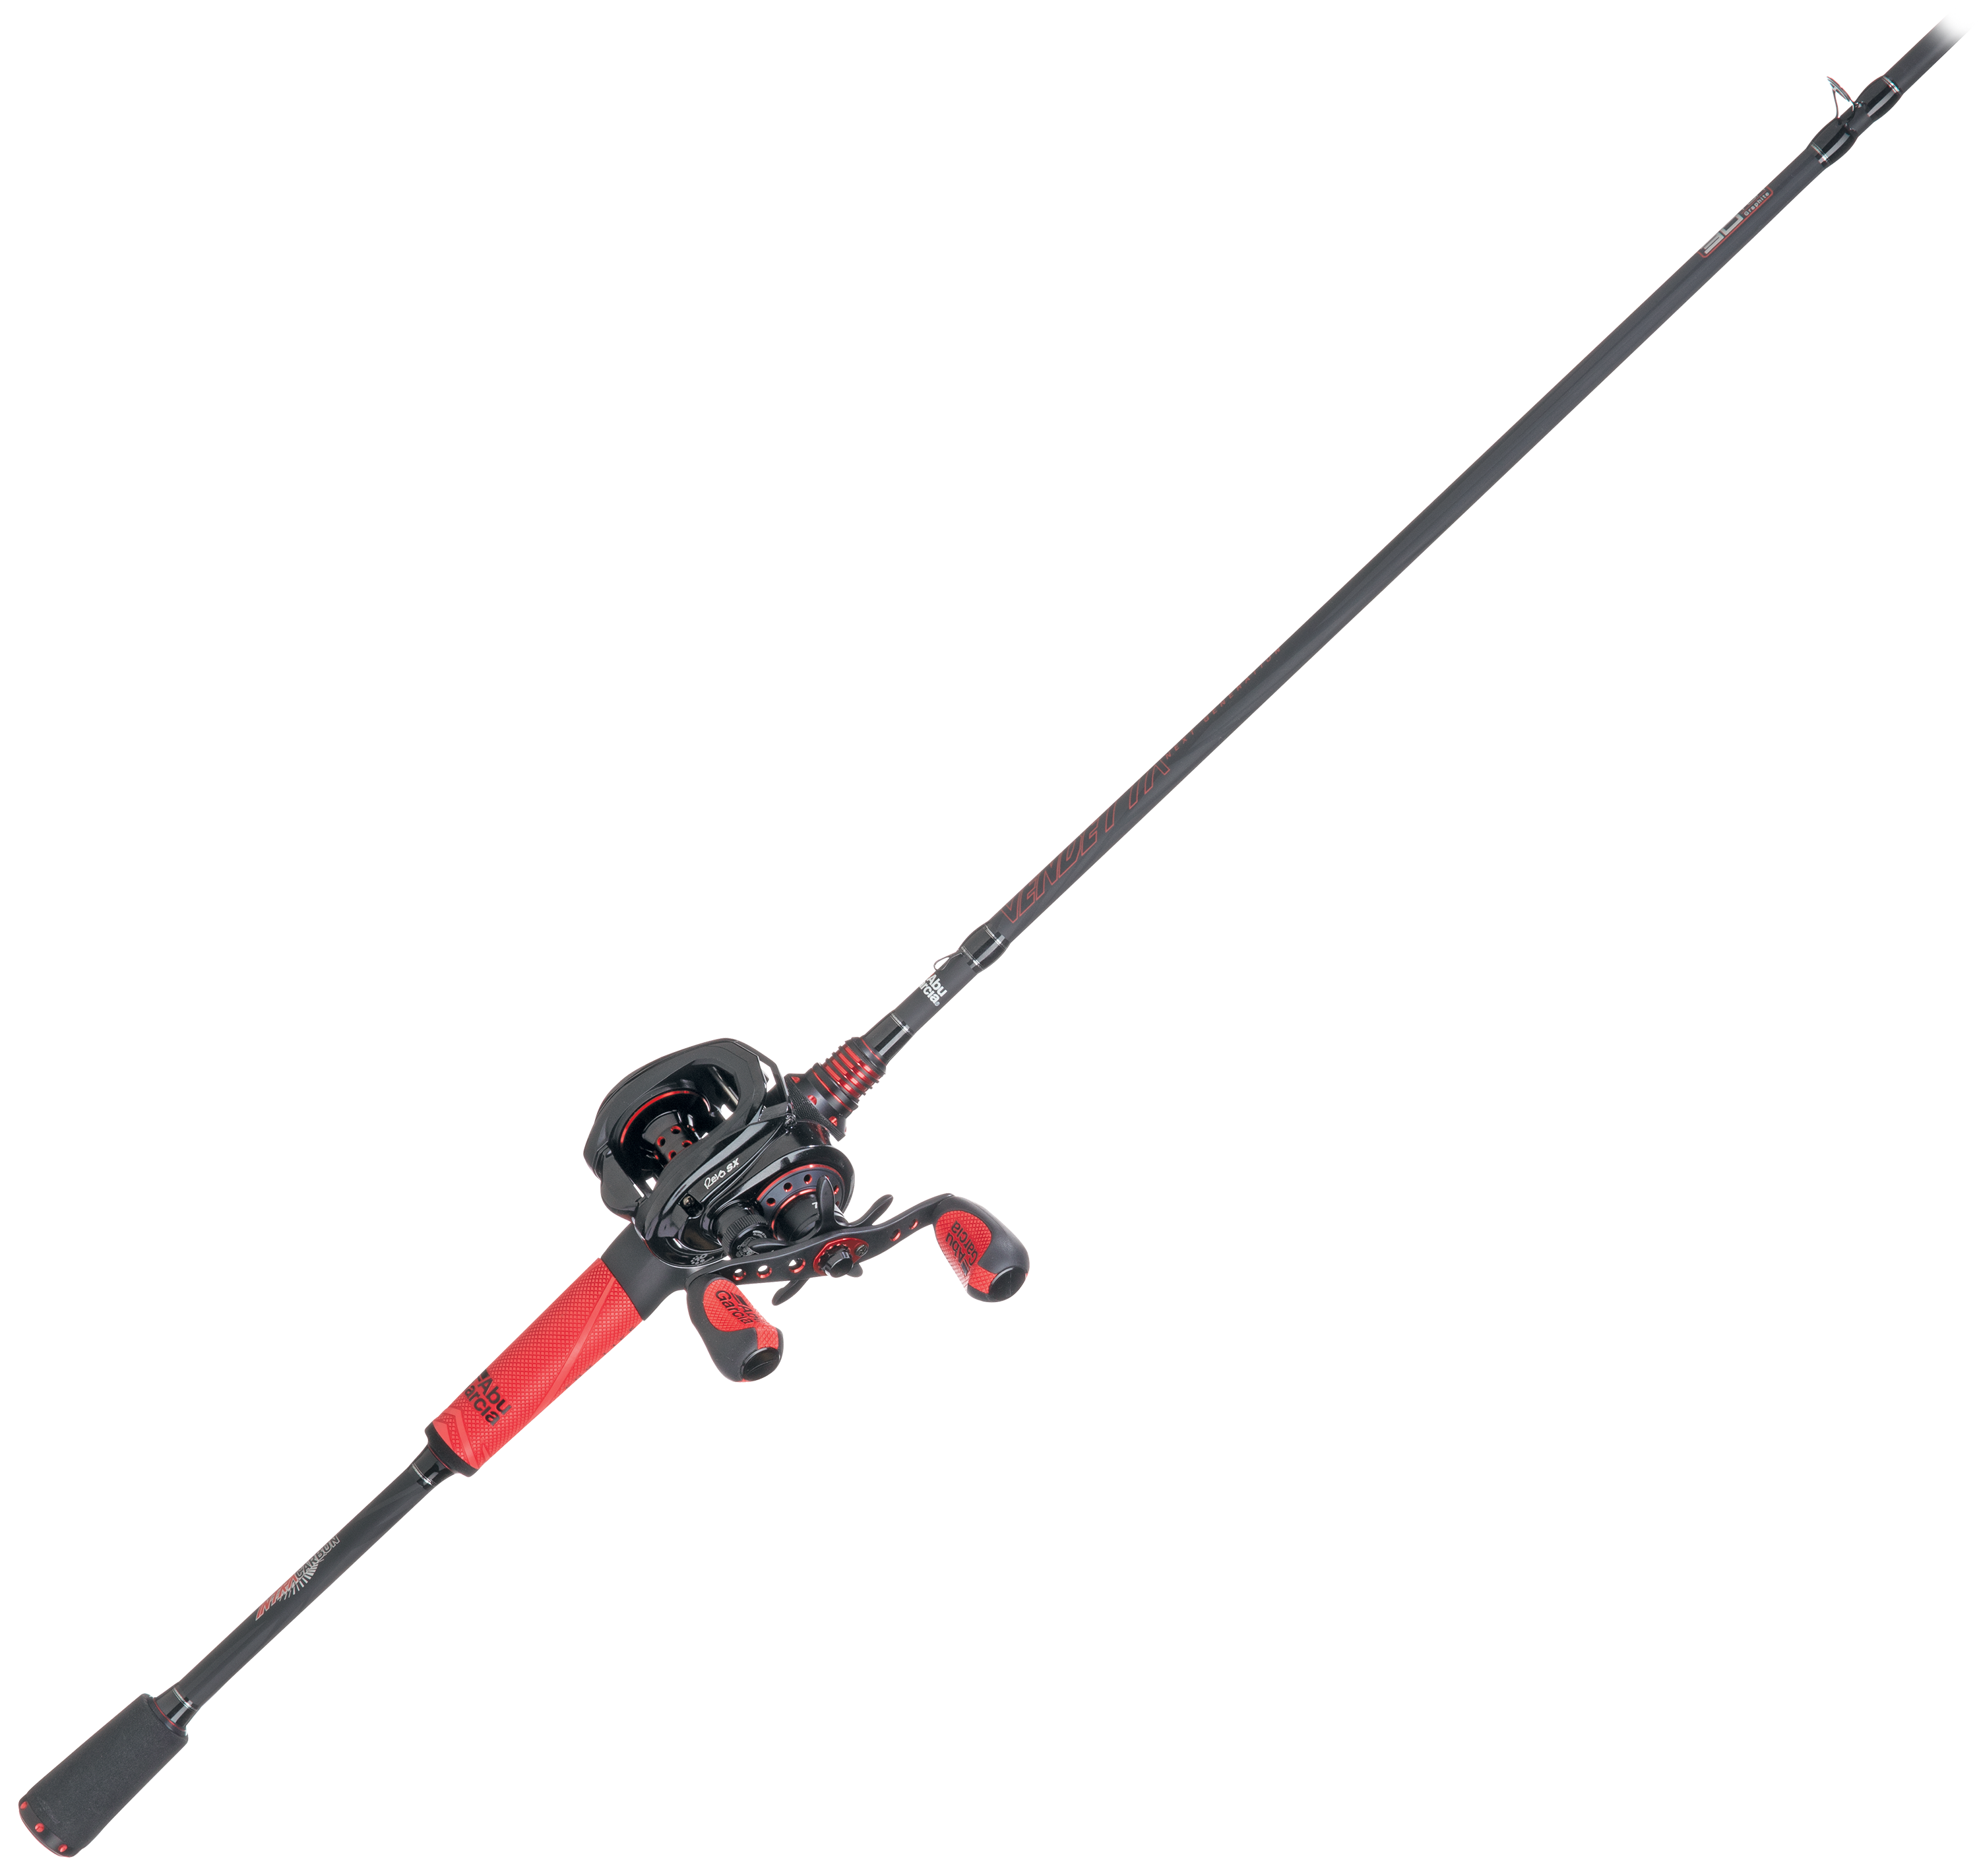 91: Abu Garcia MAX STX Low Profile Reel - The Angler